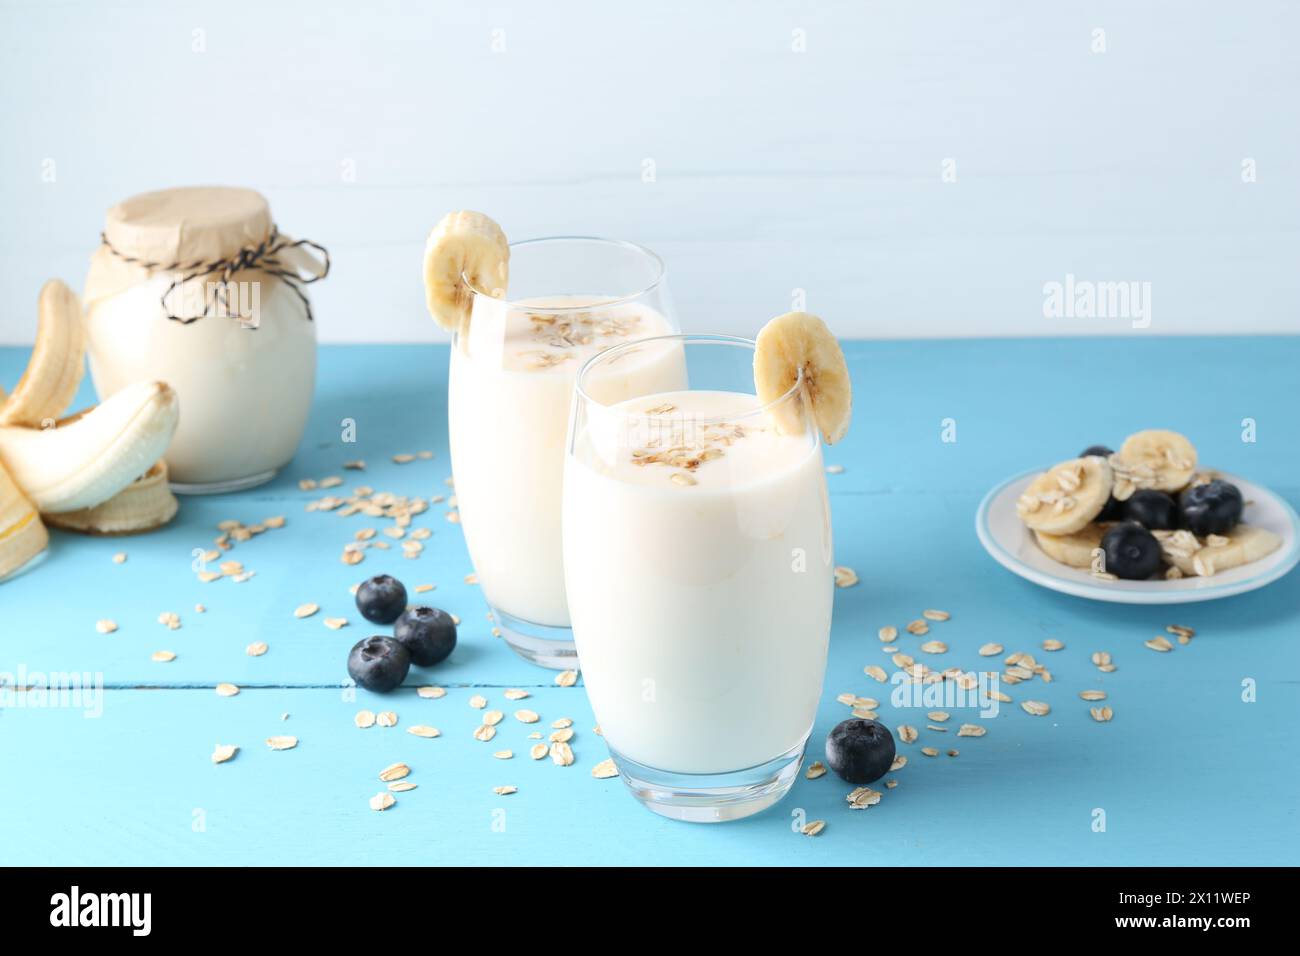 Tasty yogurt in glasses, oats, banana and blueberries on light blue wooden table Stock Photo